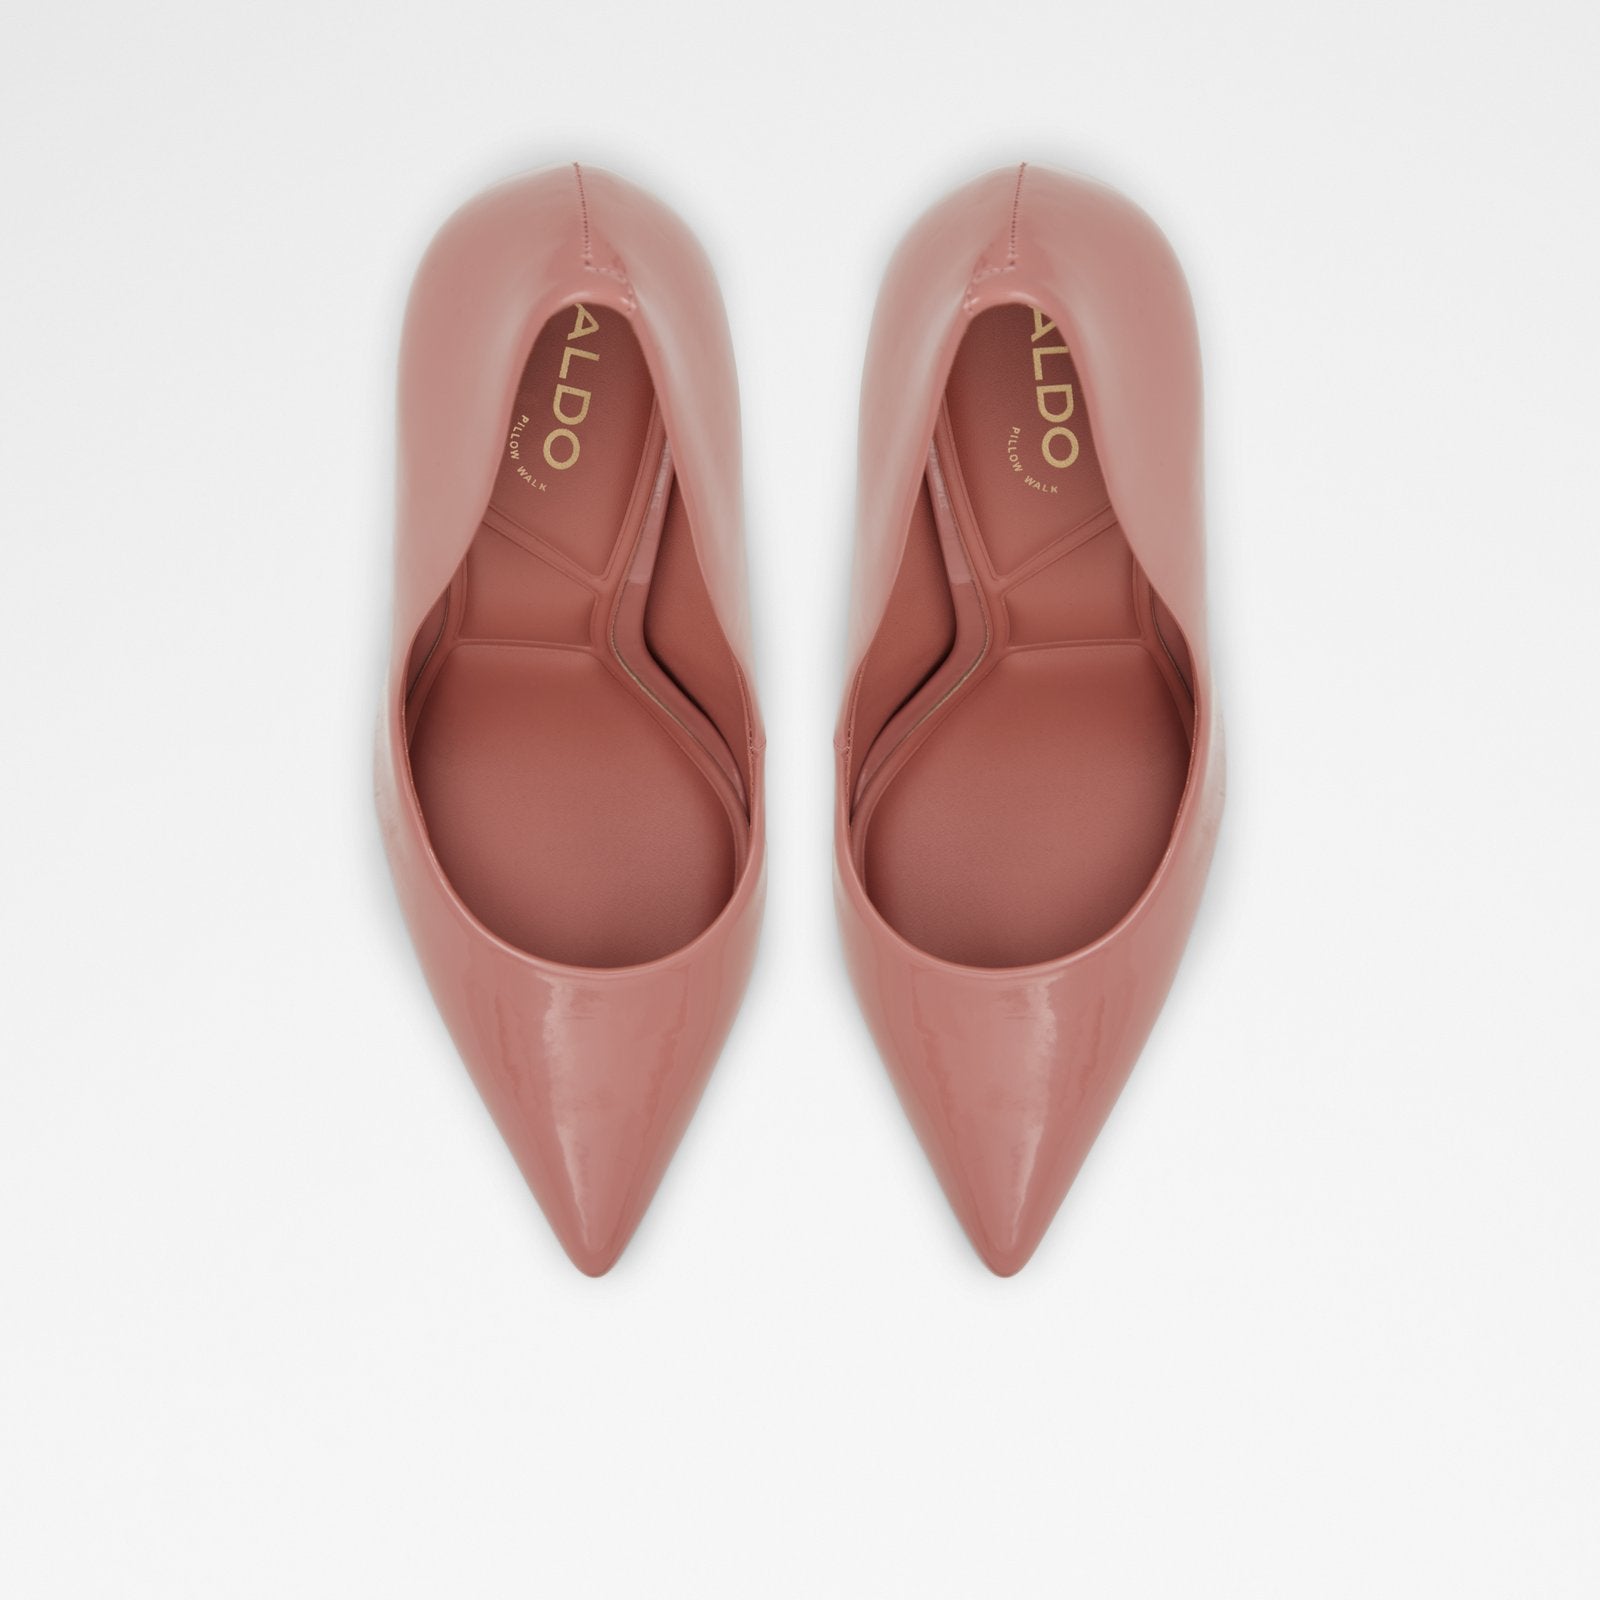 Stessy2.0 / Heeled Women Shoes - Medium Brown - ALDO KSA